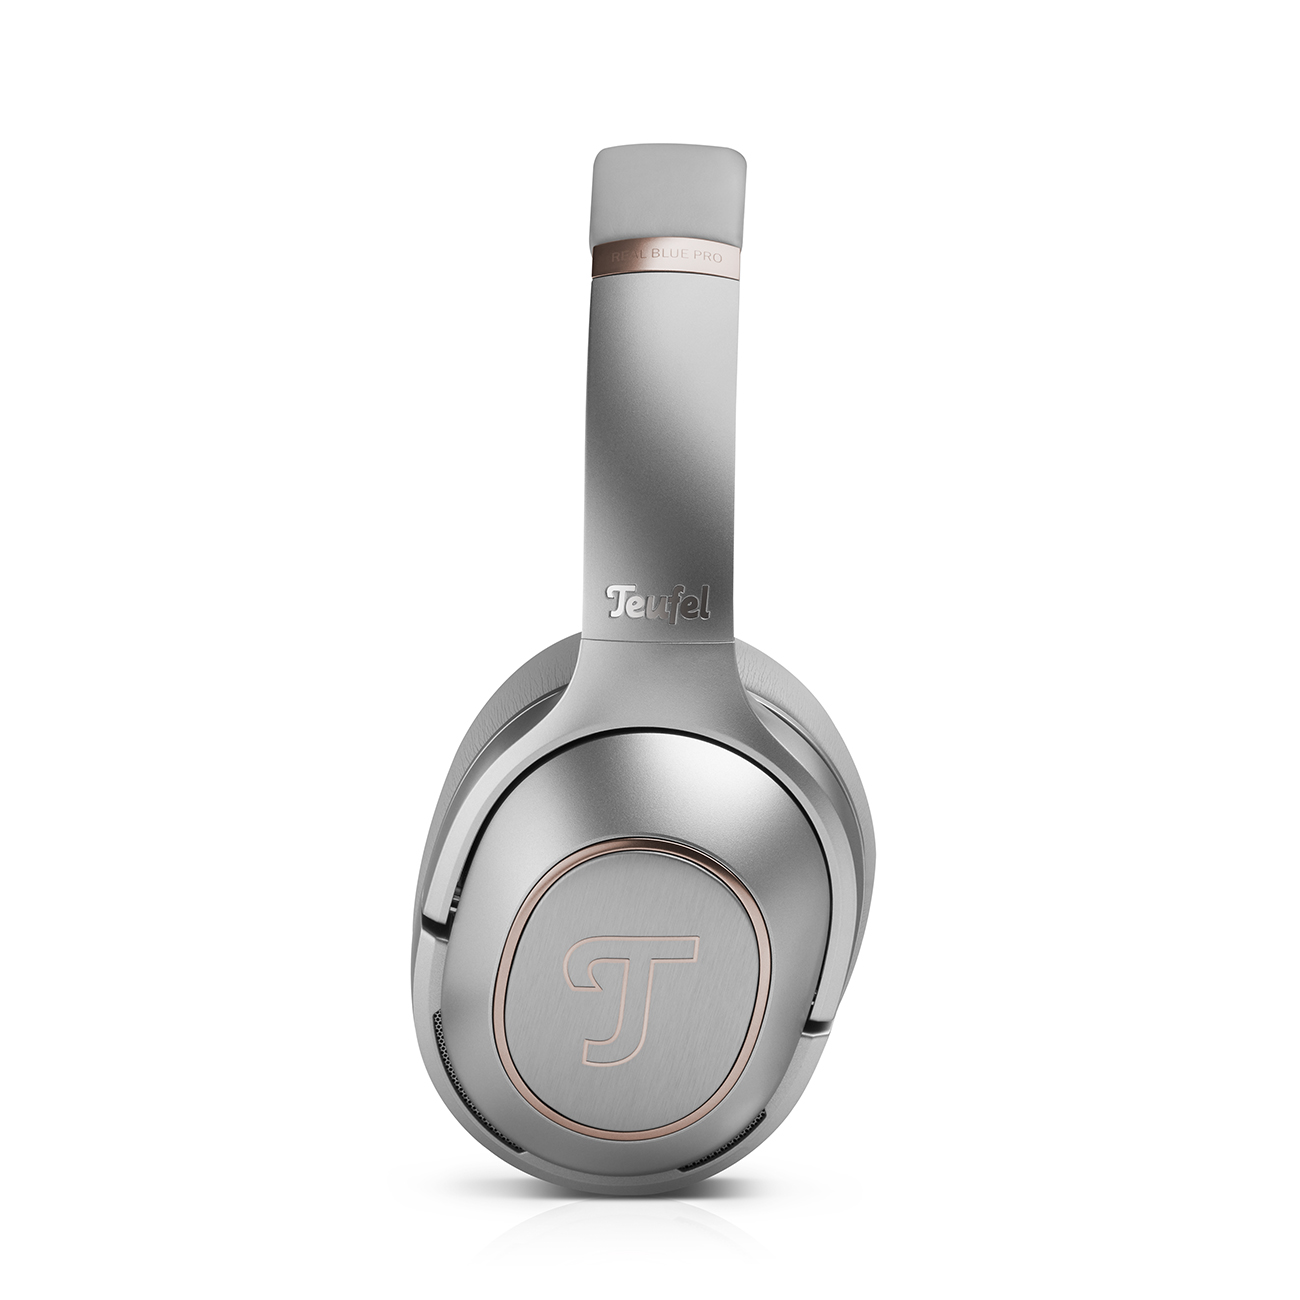 TEUFEL REAL BLUE PRO, Bluetooth Over-ear Kopfhörer Grey Titanium